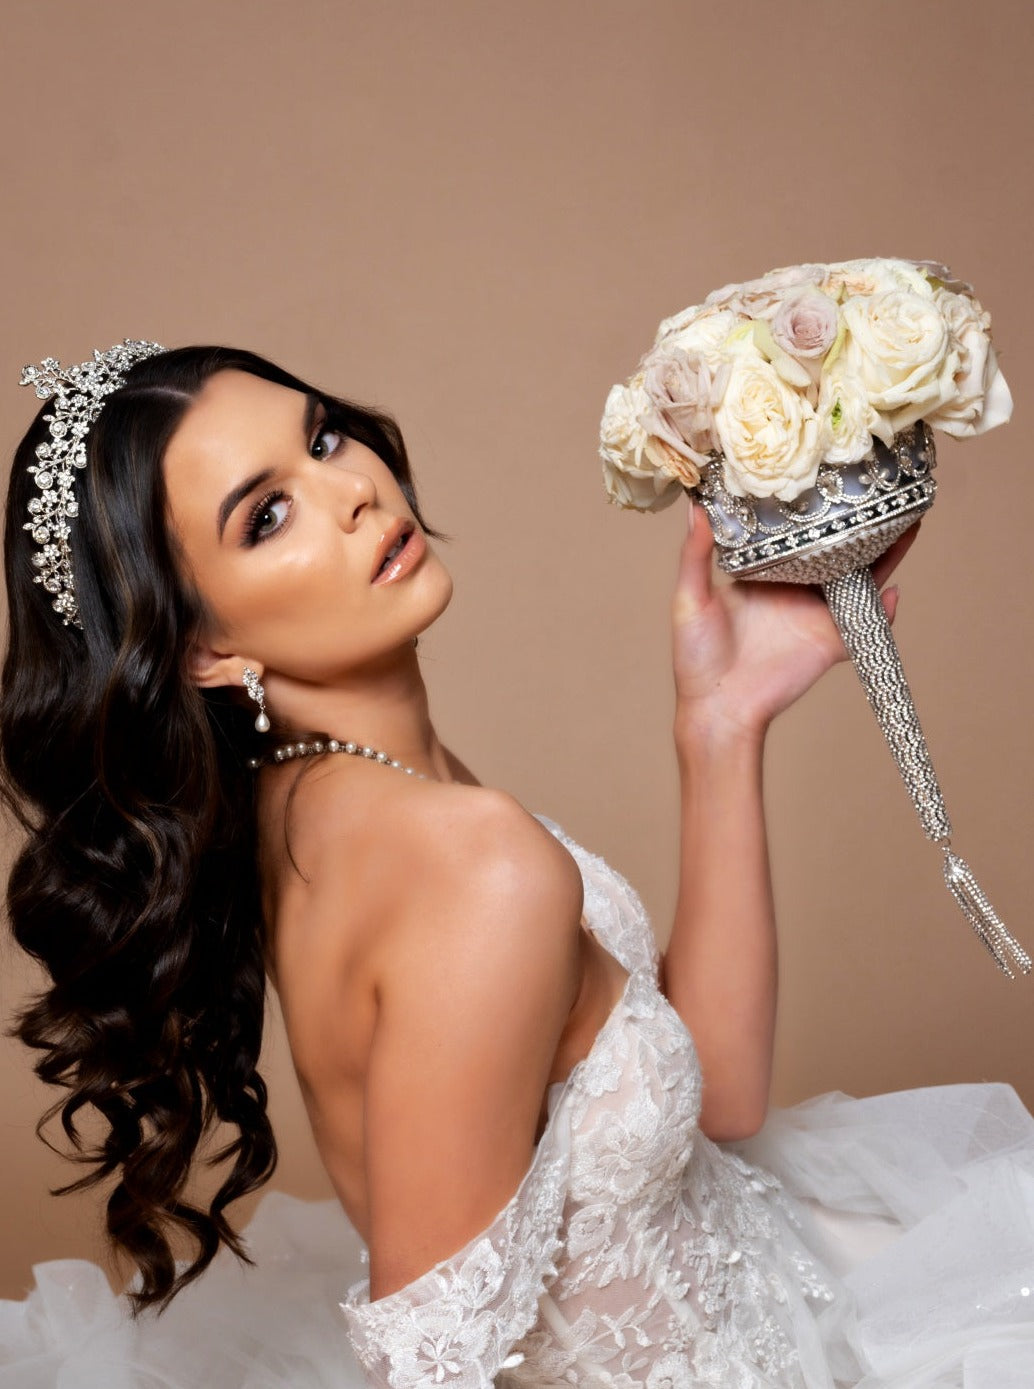 Bride Bouquet Holder, Silver Color, Luxury Wedding Accessories – Bridal Port